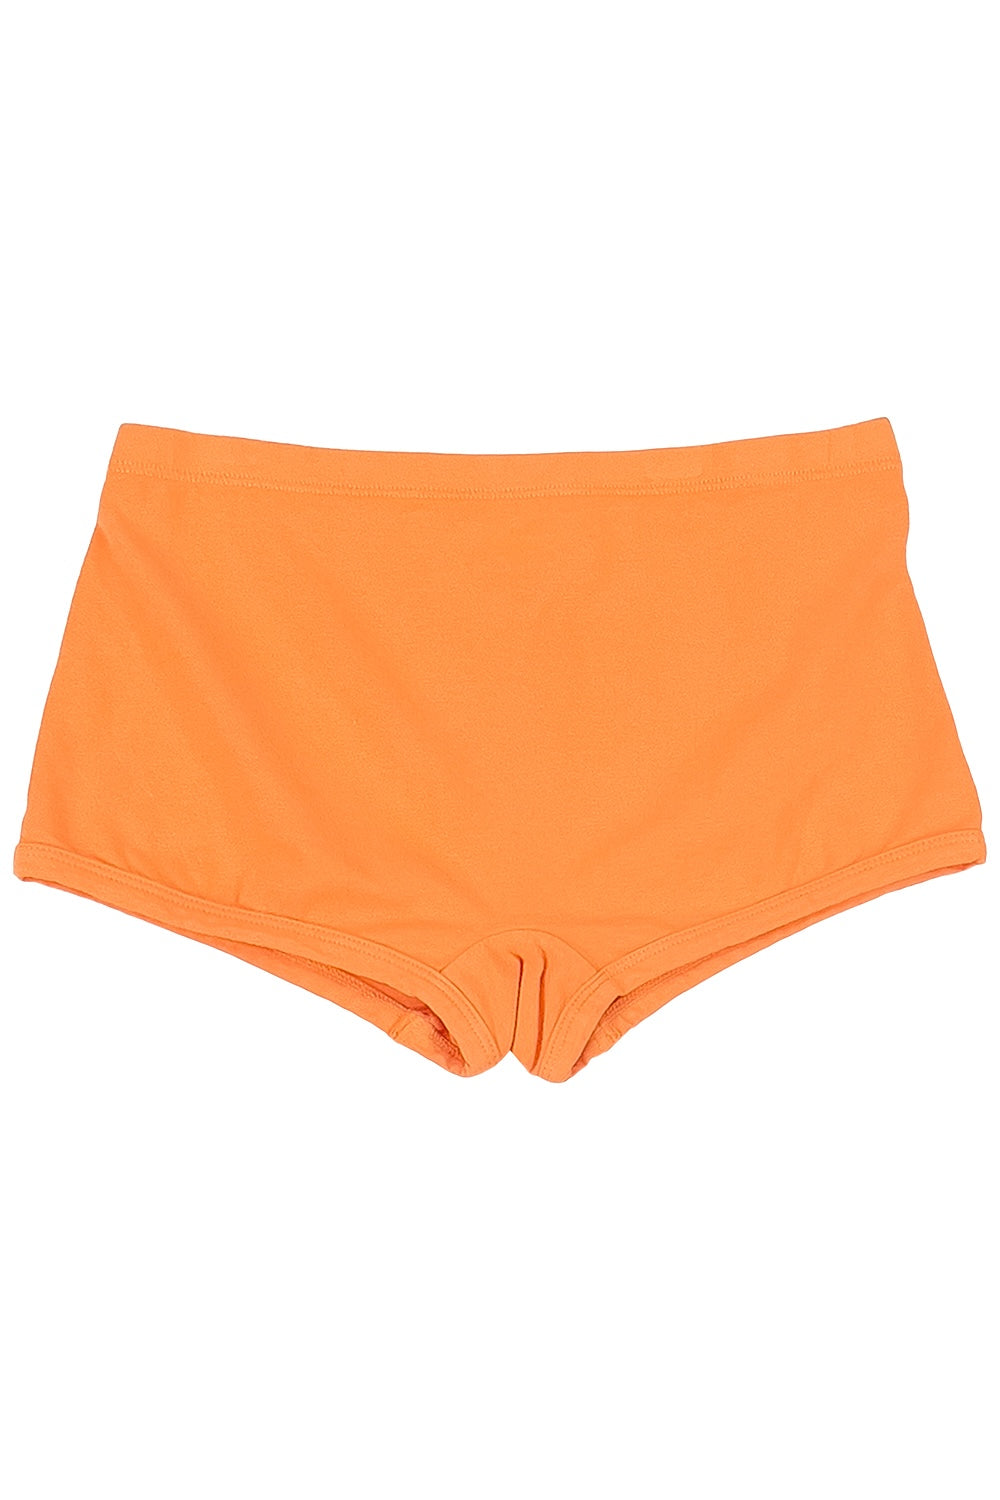 Boy Short | Jungmaven Hemp Clothing & Accessories / Color: Apricot Crush